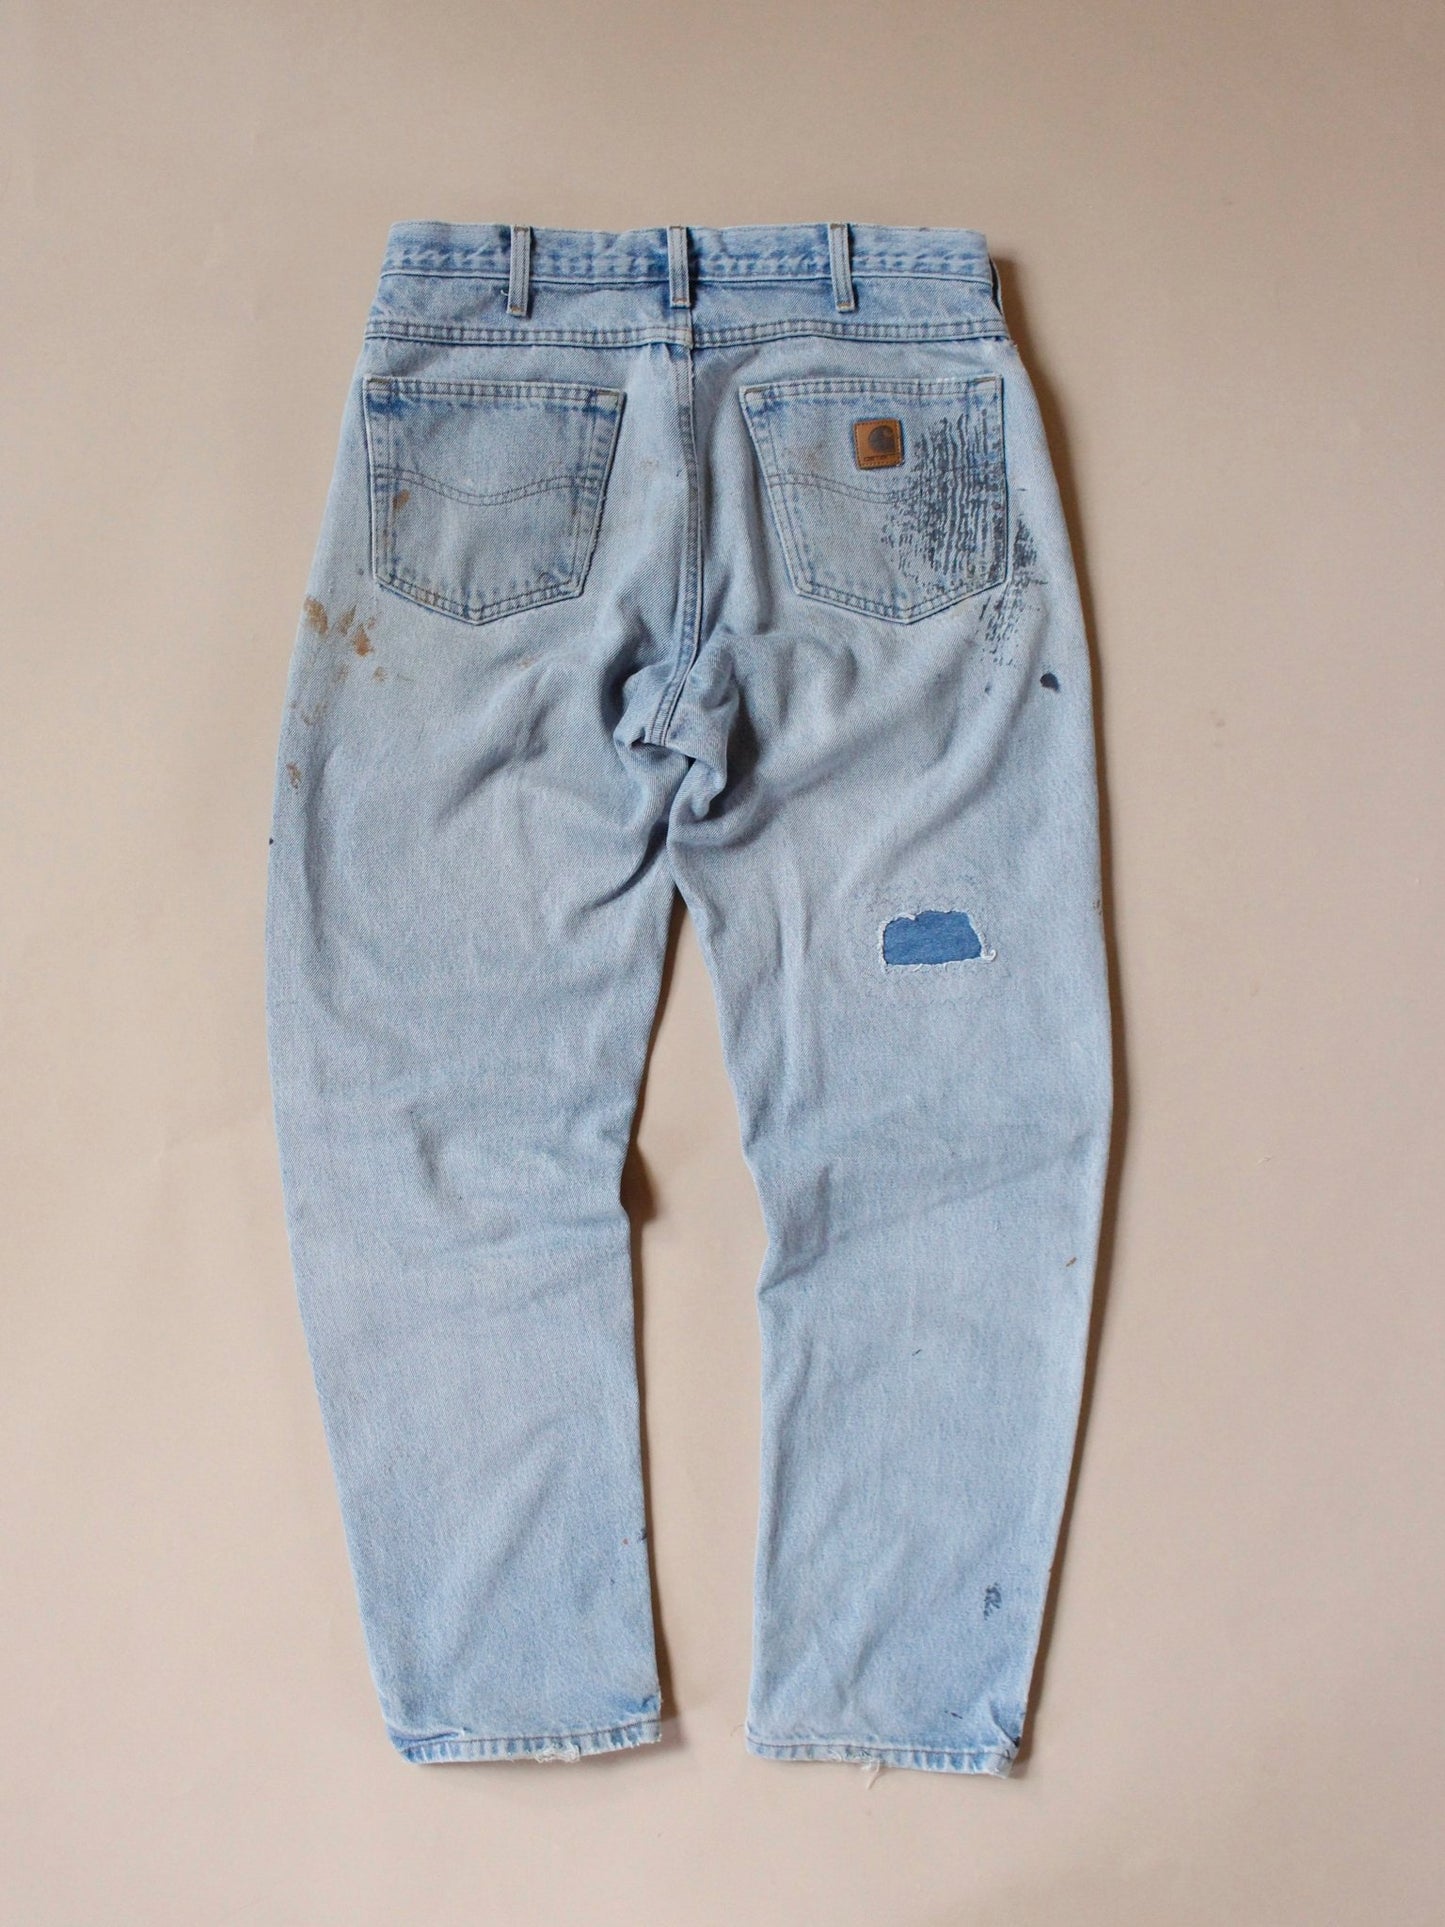 2000s Carhartt Patchwork Jeans